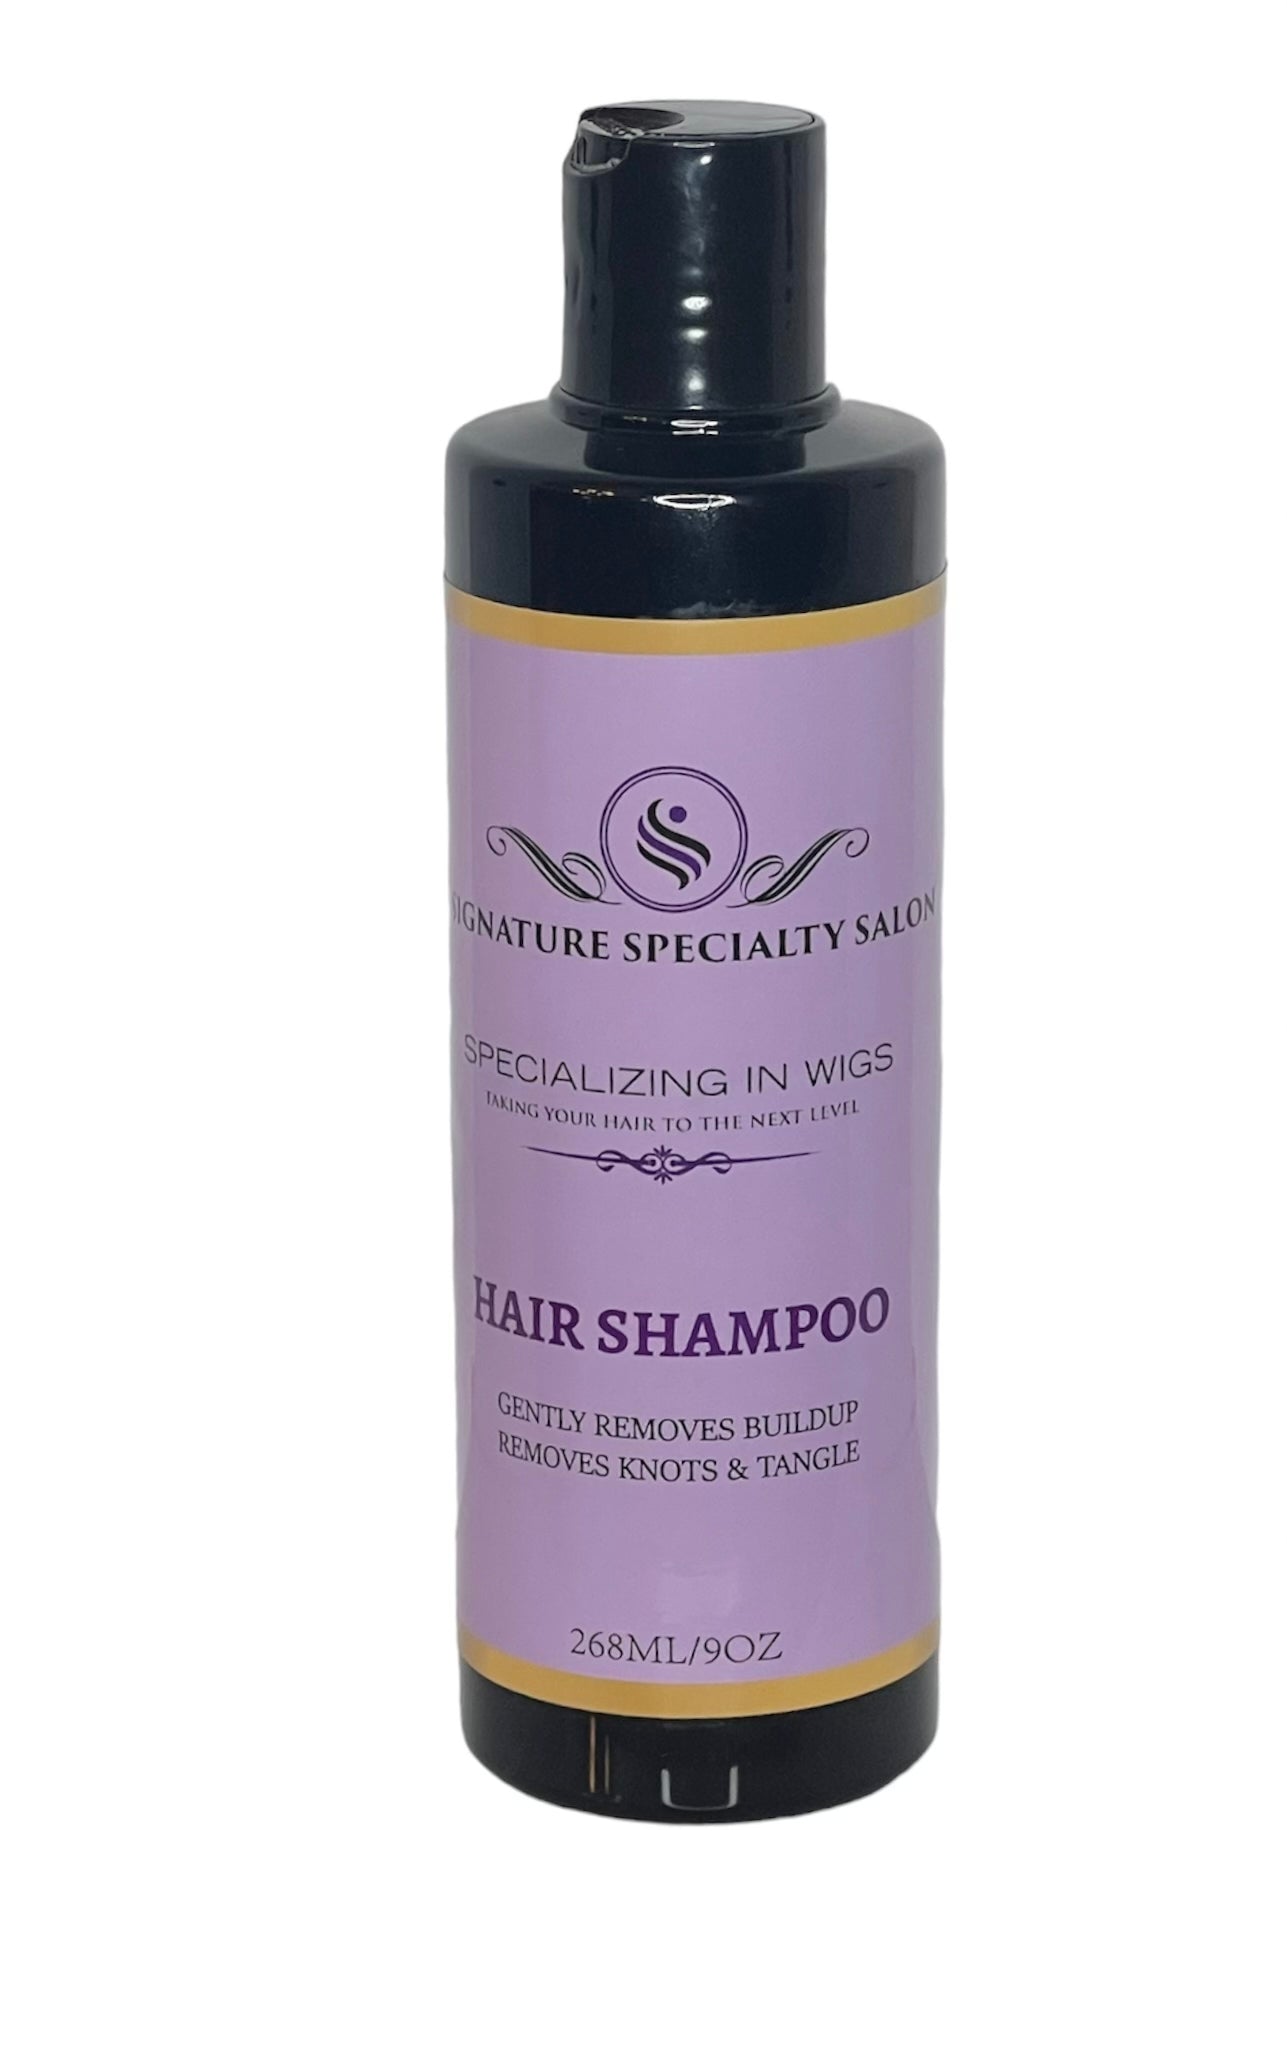 Hair Shampoo - Signature Specialty Salon